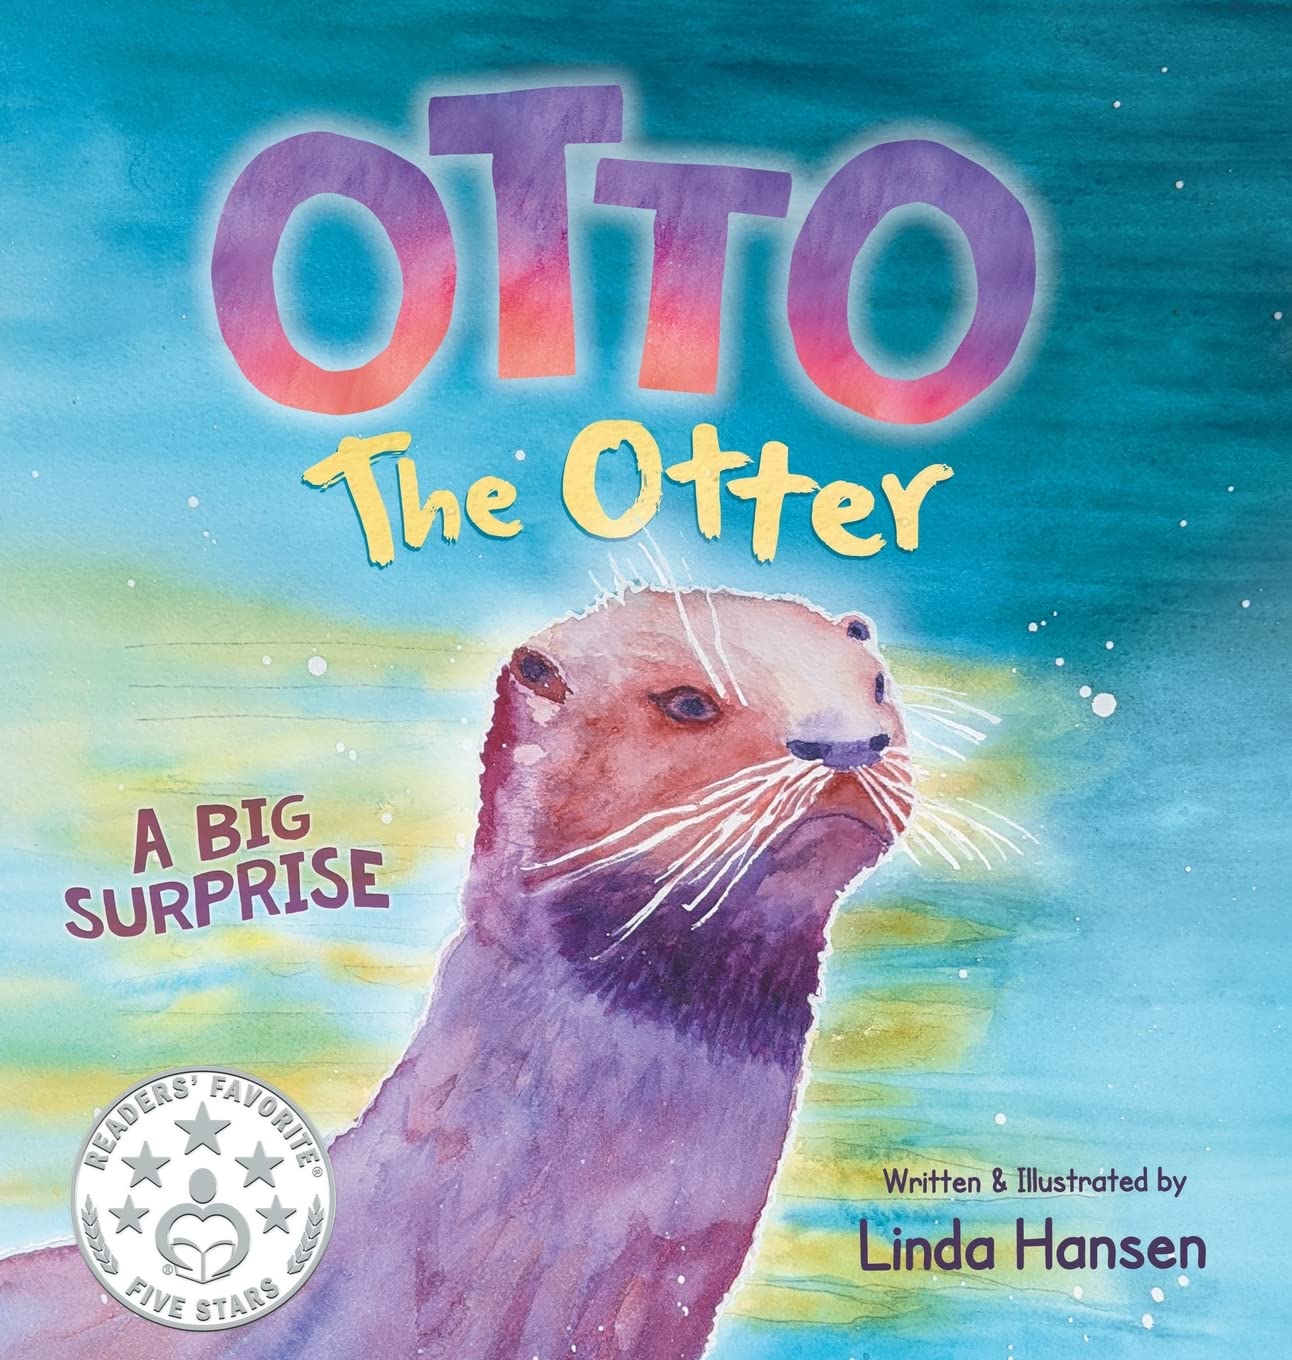 Book Cover of Linda Hansen's "Otto the Otter"